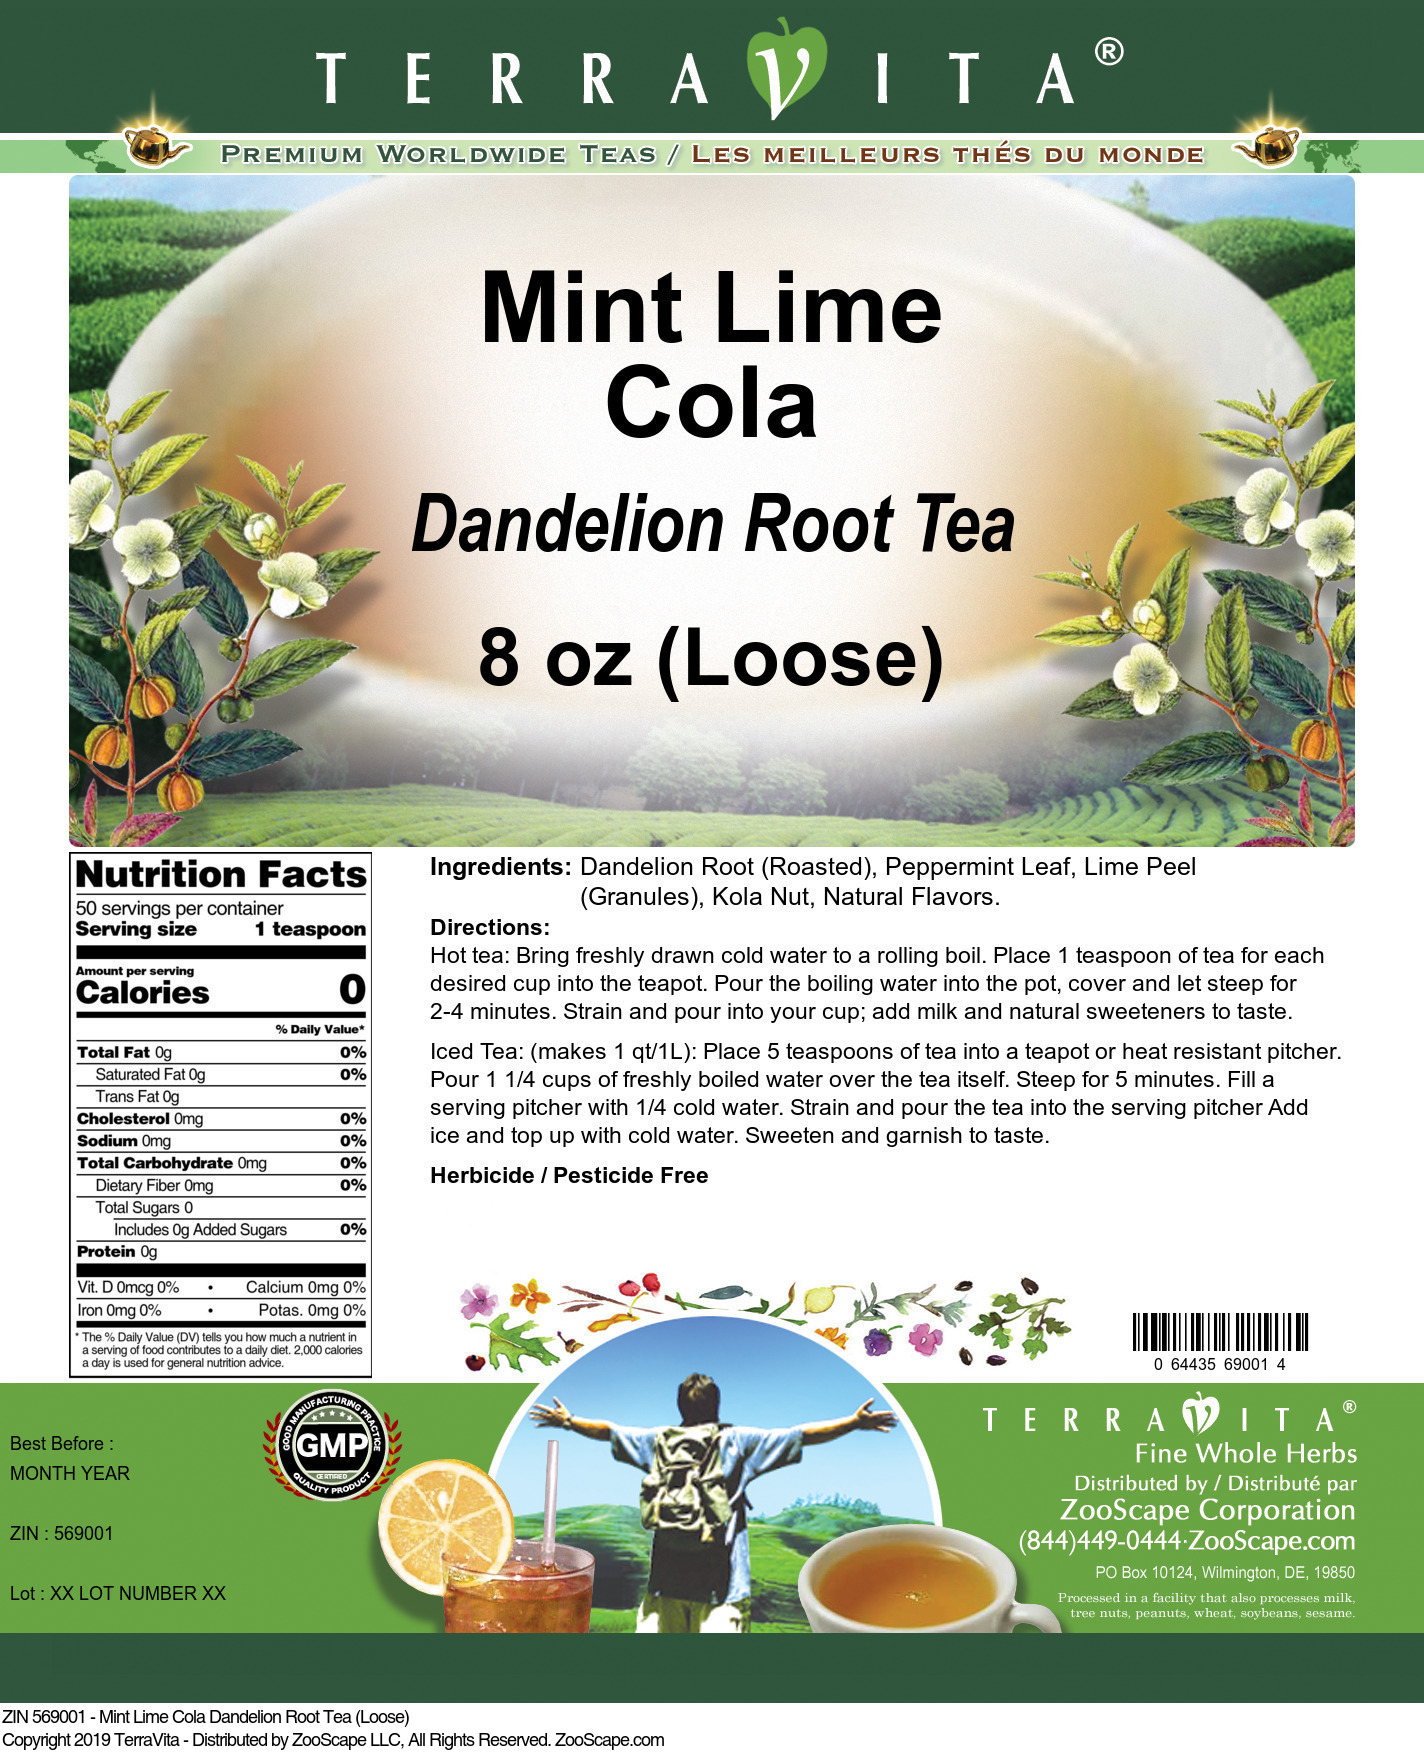 Mint Lime Cola Dandelion Root Tea (Loose) - Label